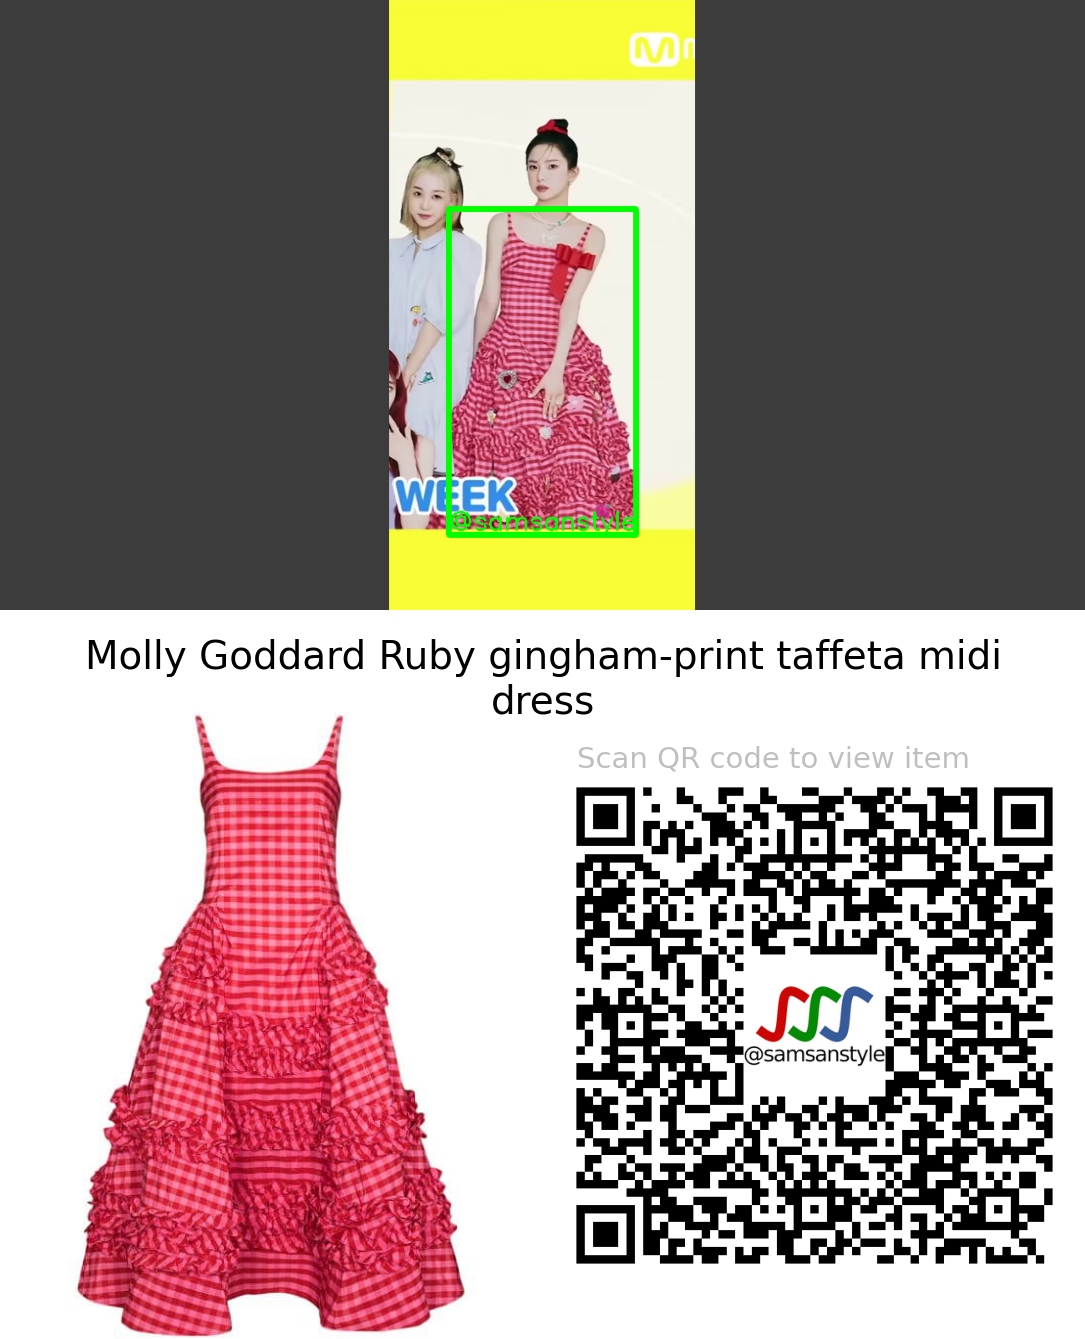 Kep1er Yujin | Up! MV | Molly Goddard Ruby gingham-print taffeta midi dress